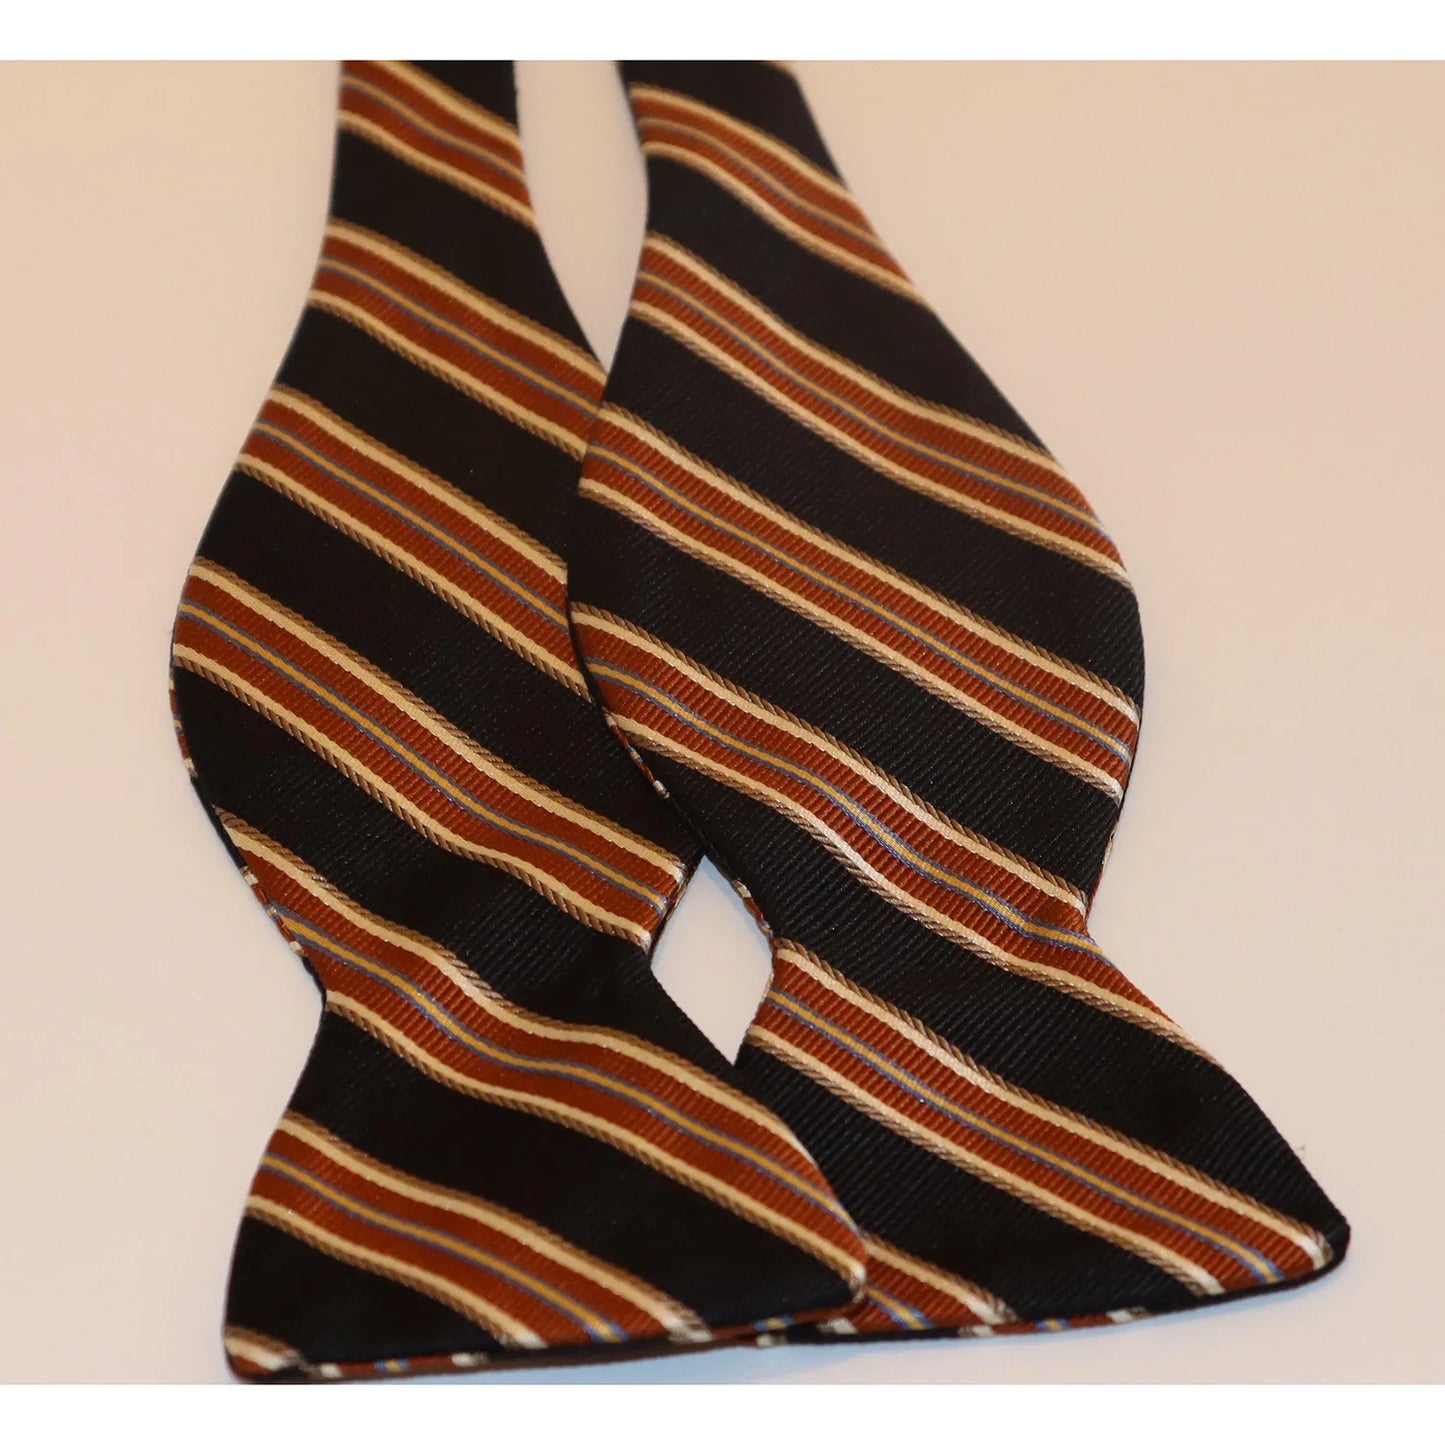 R. Hanauer Bow Tie - Black with Brown/Cream Stripes